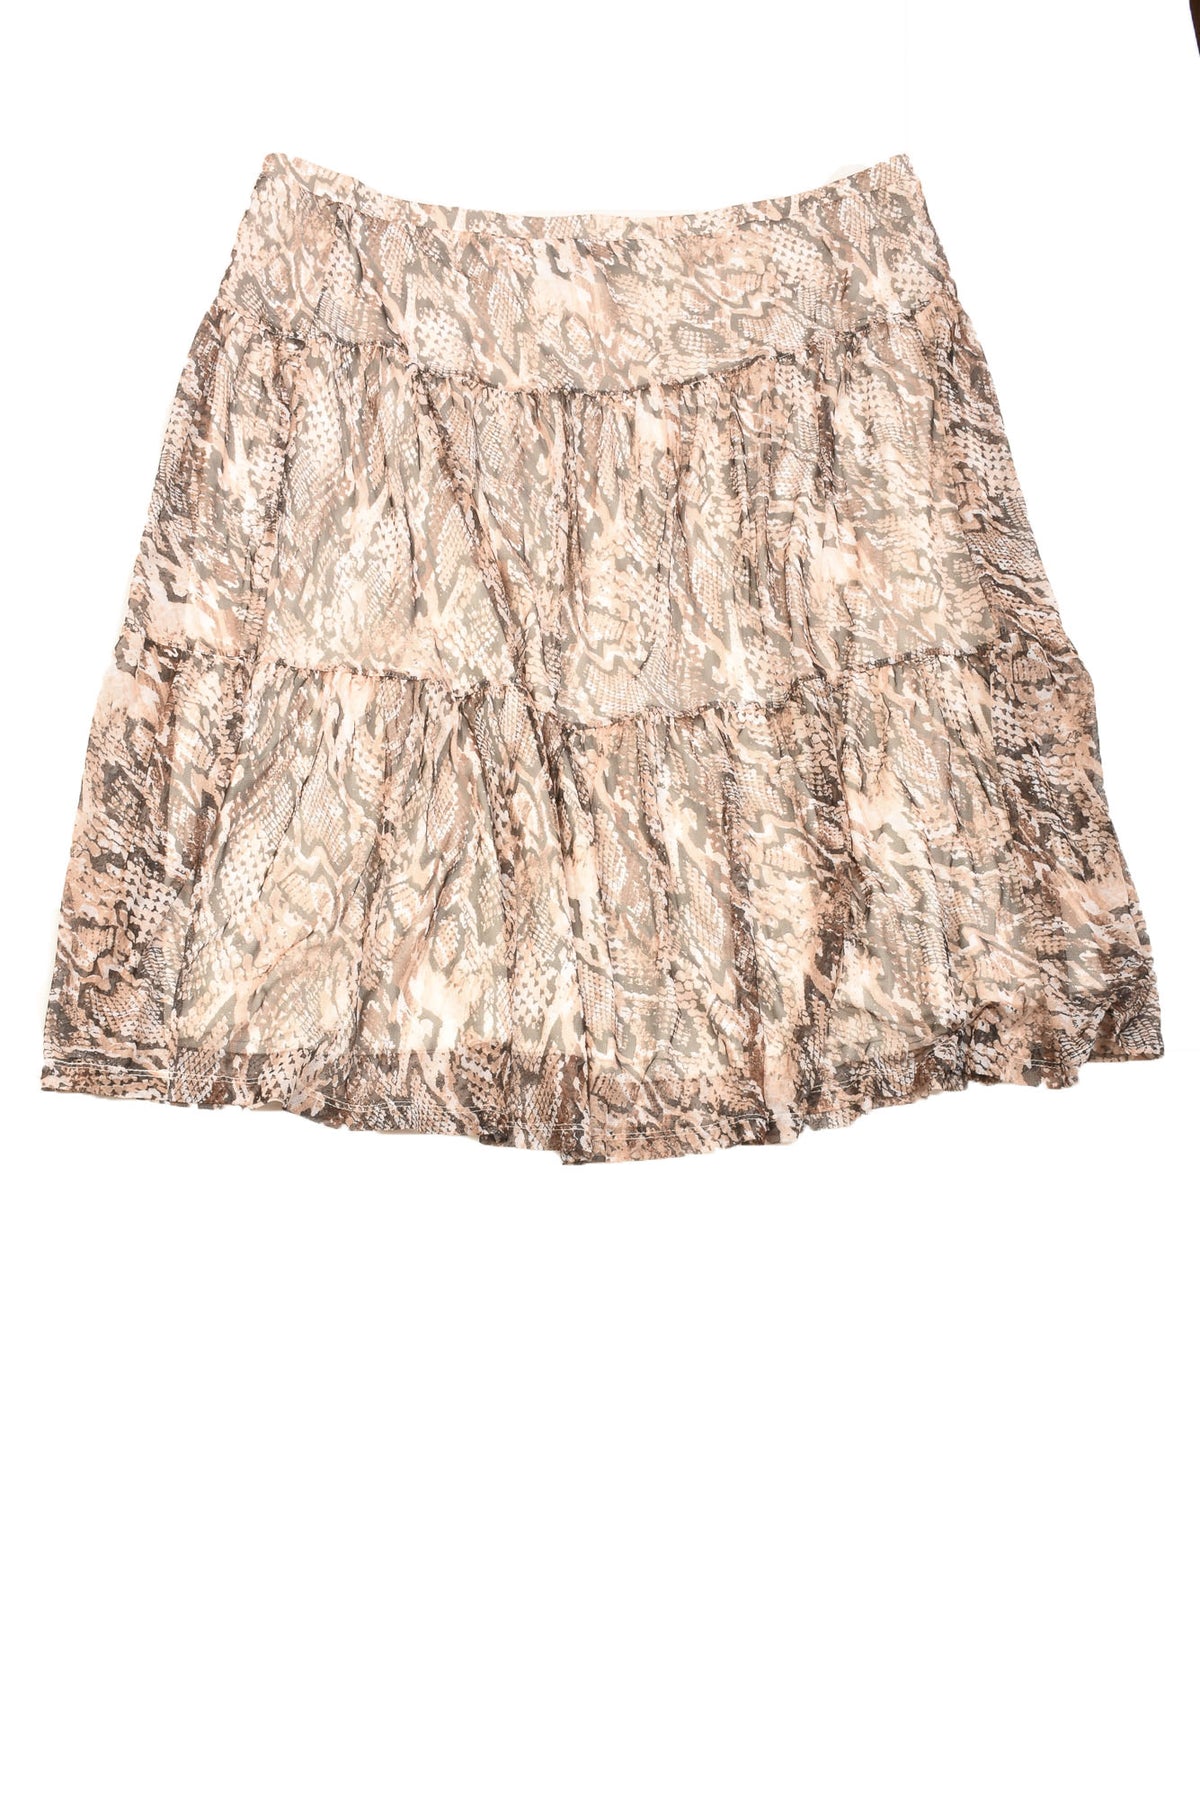 Nina Leonard Size 2X Women&#39;s Skirt